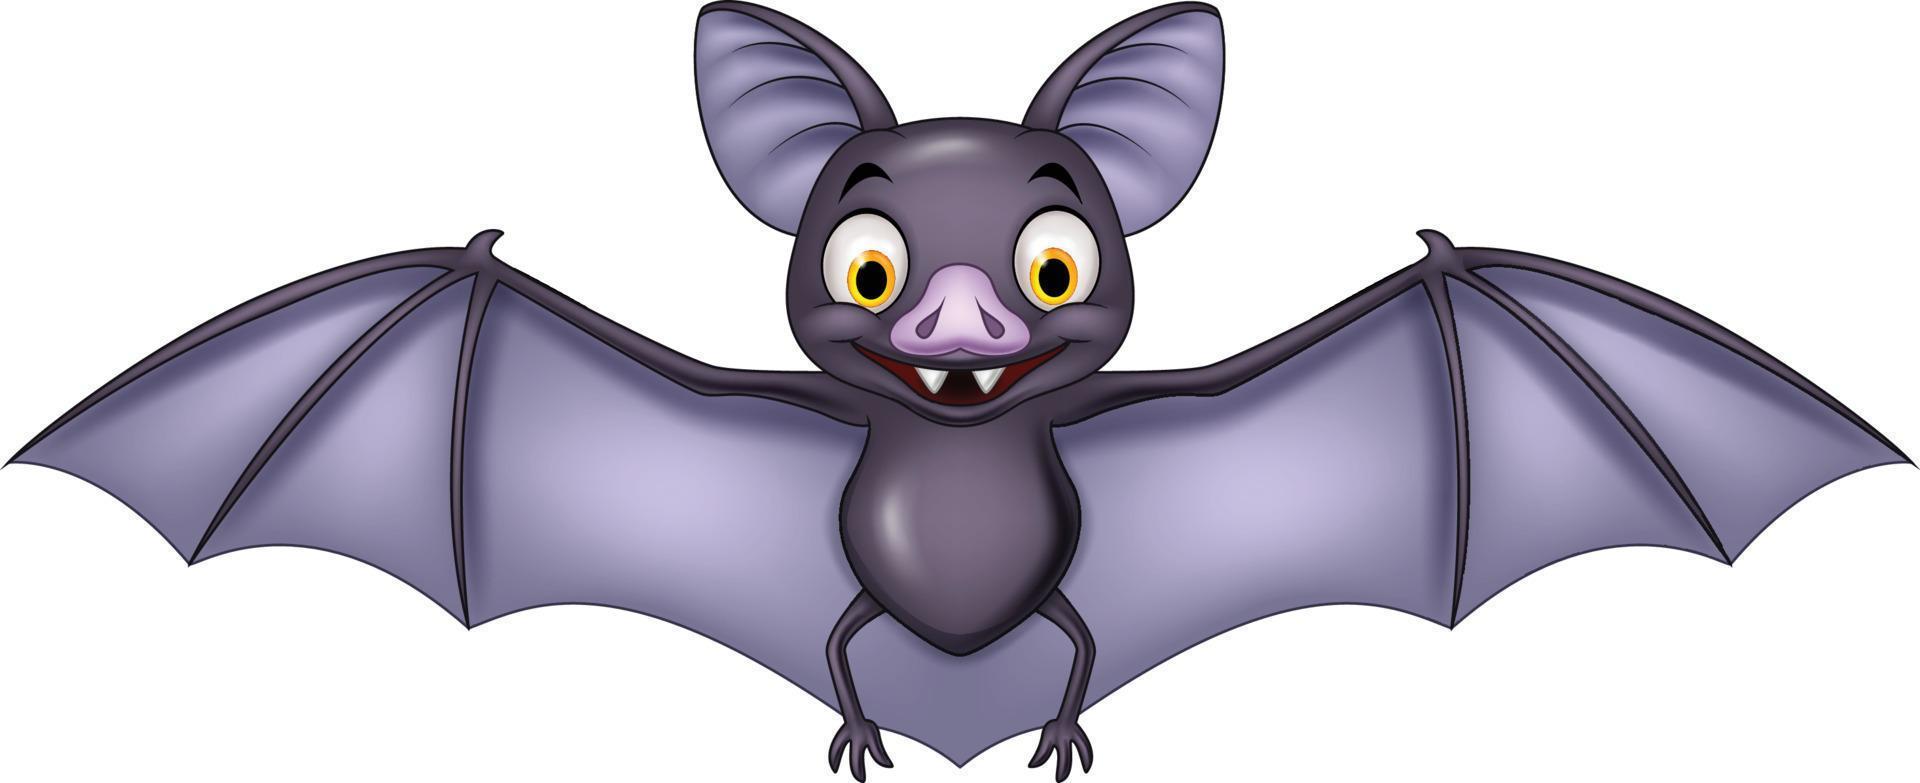 Cartoon bat isolated on white background vector